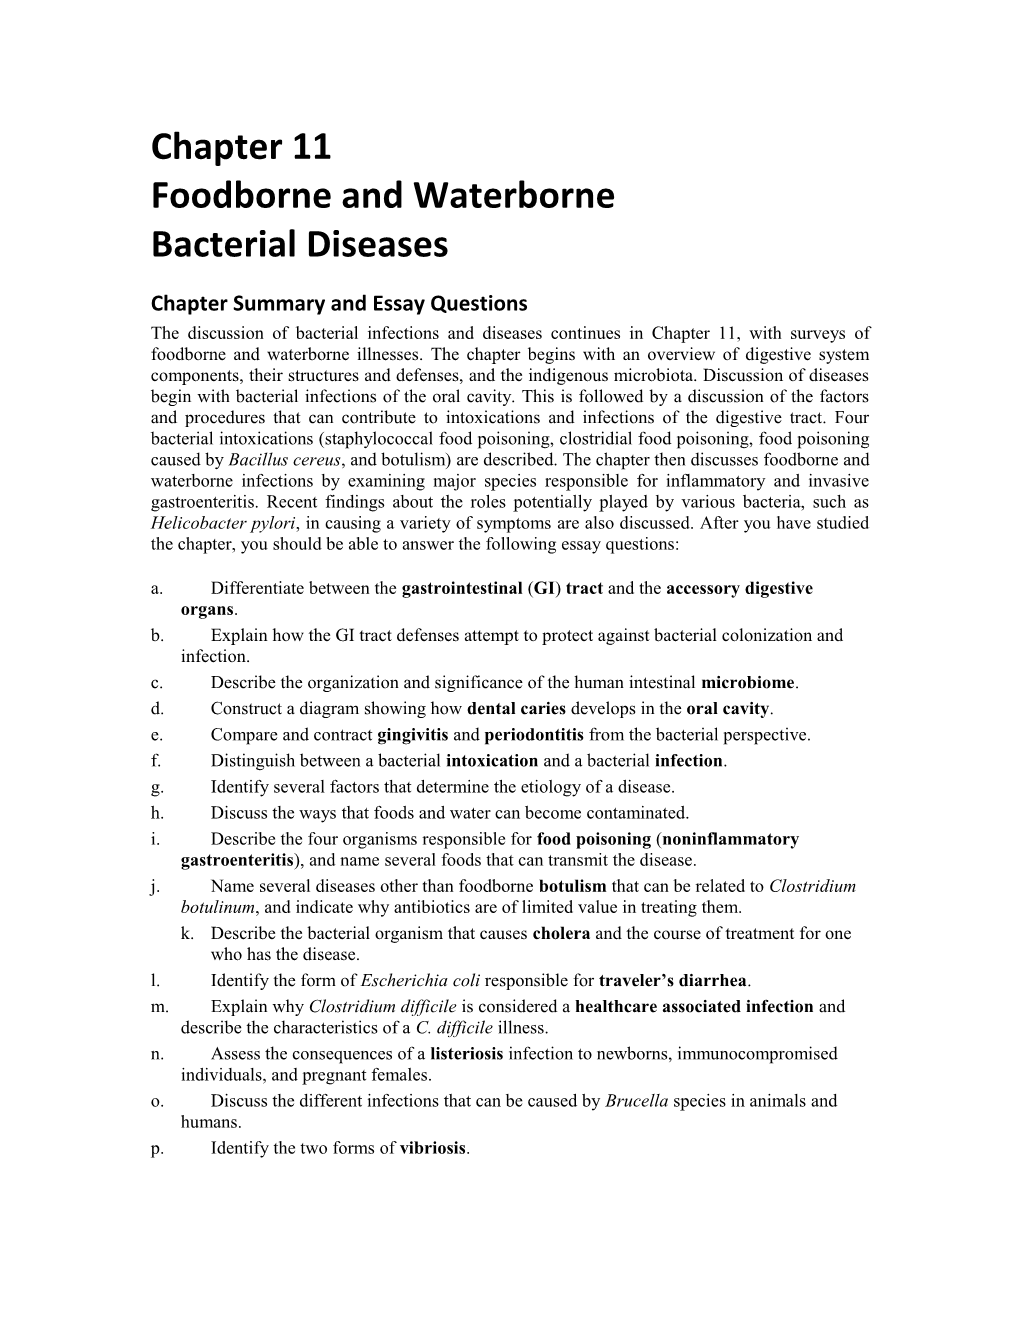 Foodborne and Waterborne